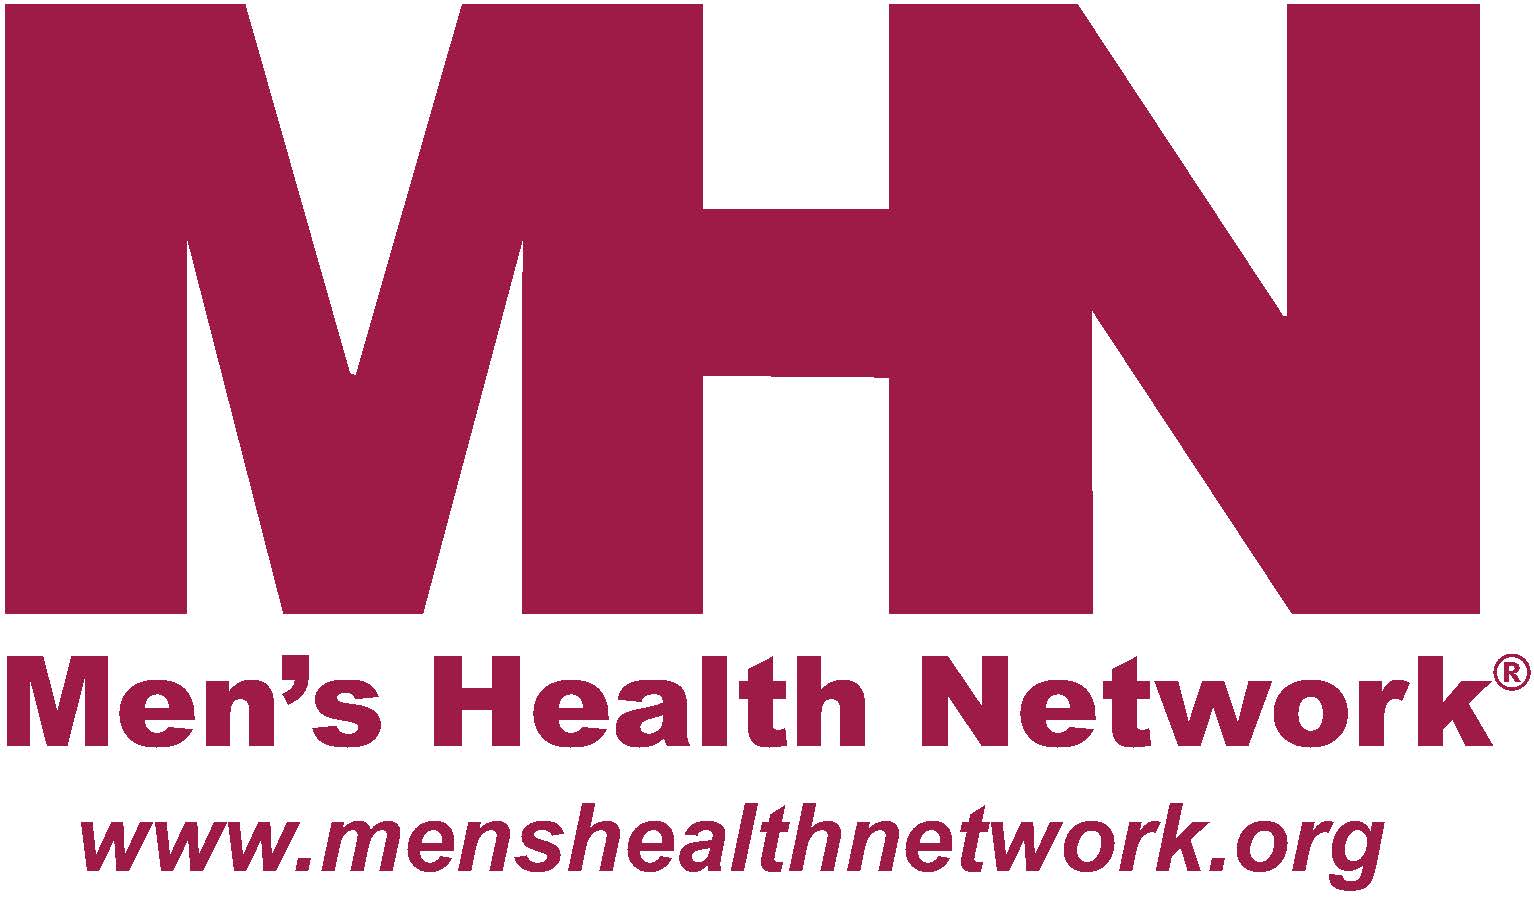 Men's Health Network logo.